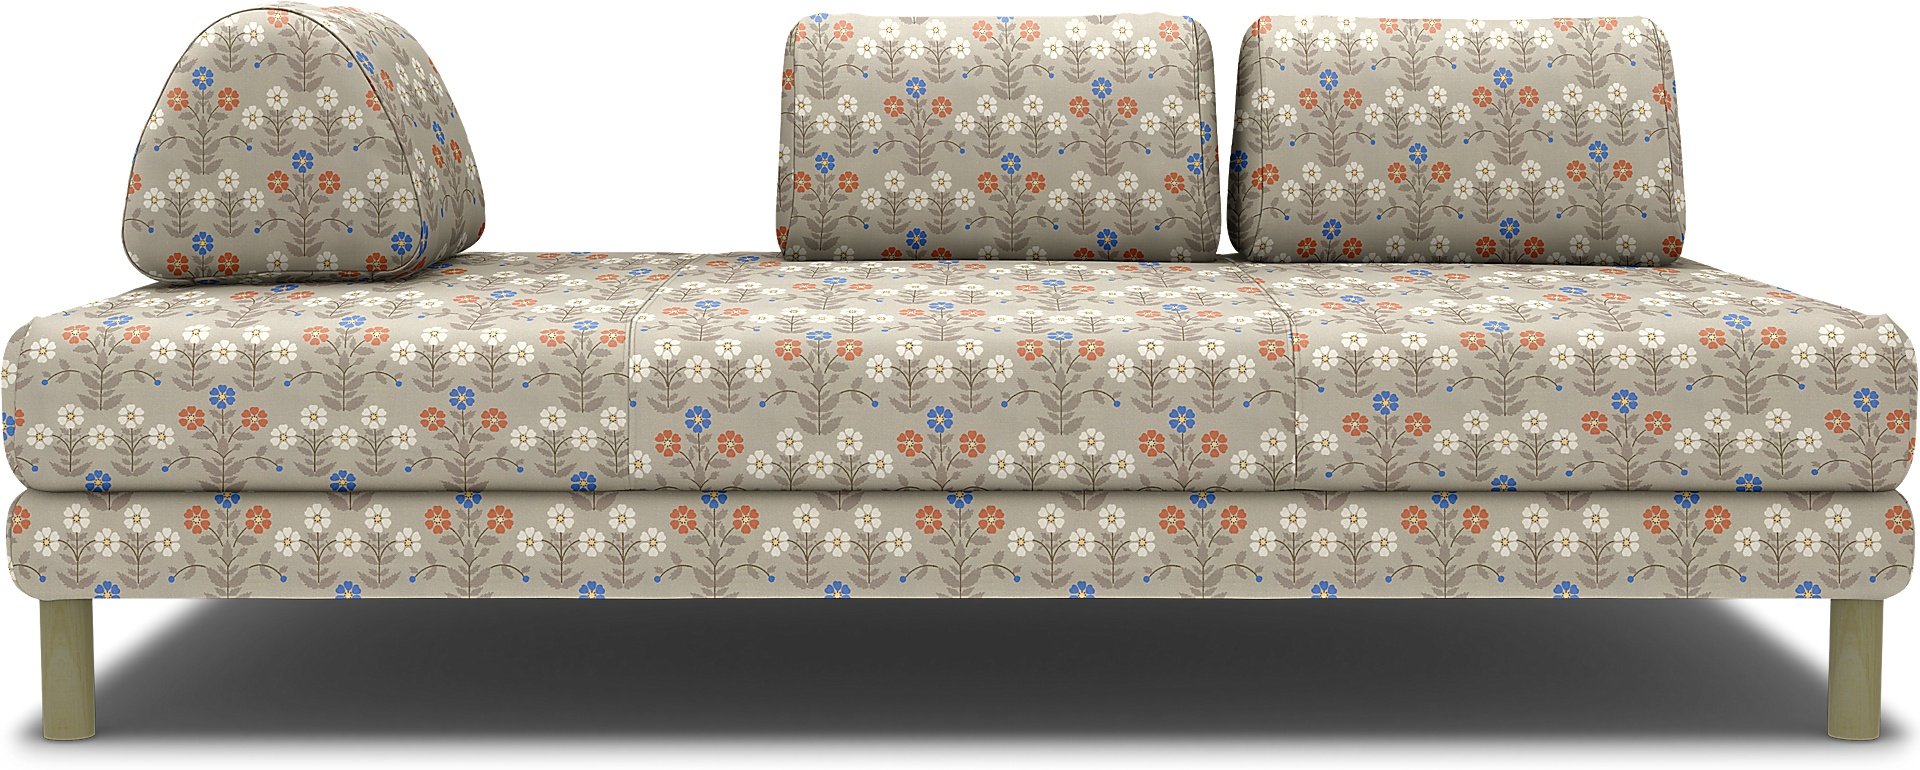 IKEA - Flottebo sofa bed cover 120 cm, Sippor Blue/Orange, BEMZ x BORASTAPETER COLLECTION - Bemz